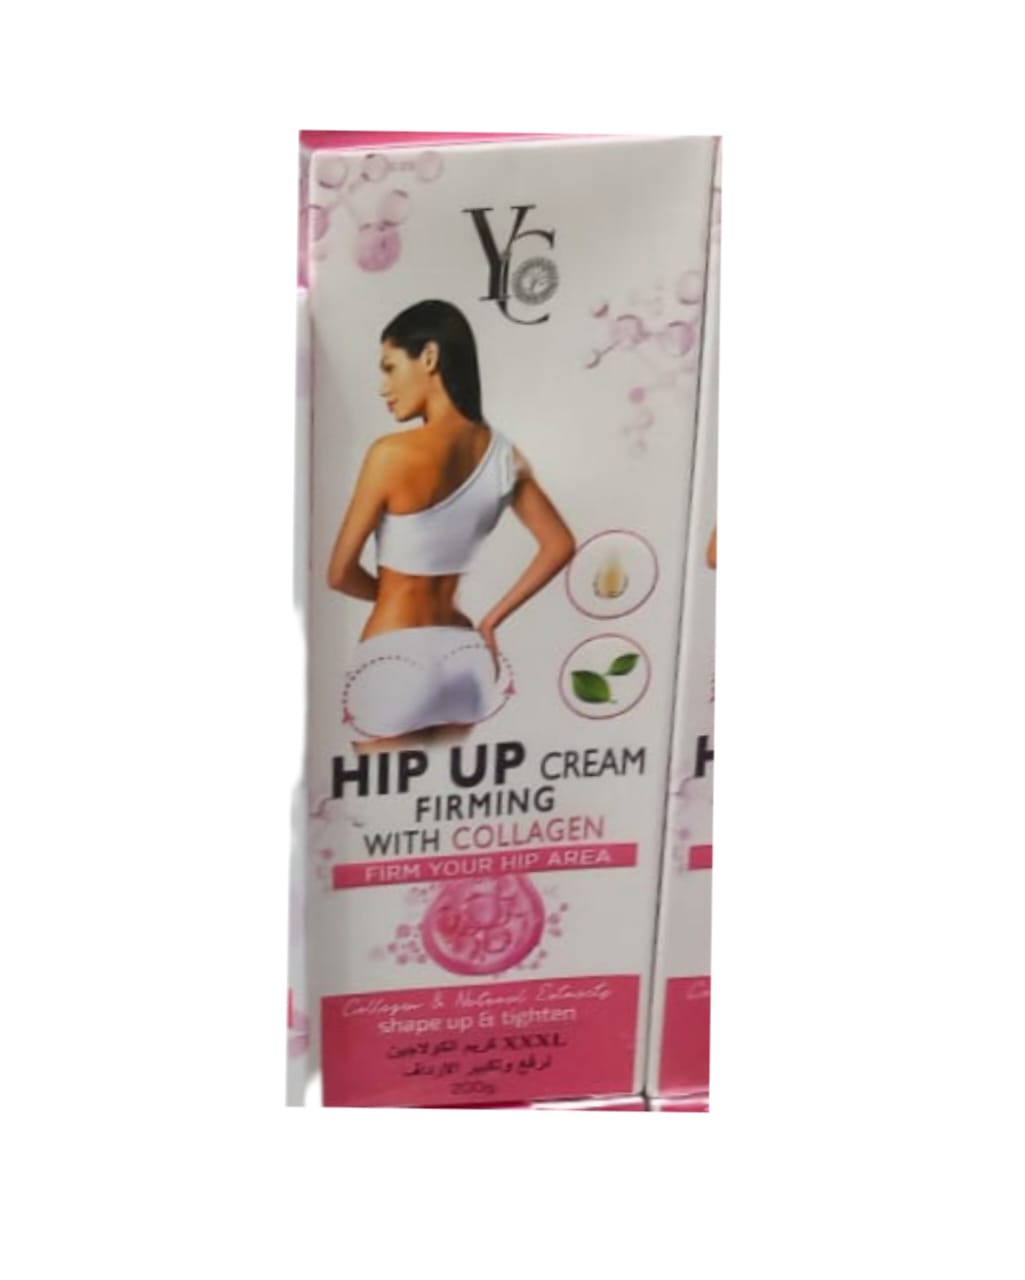 YC Hip Up Cream Firming With Collagen